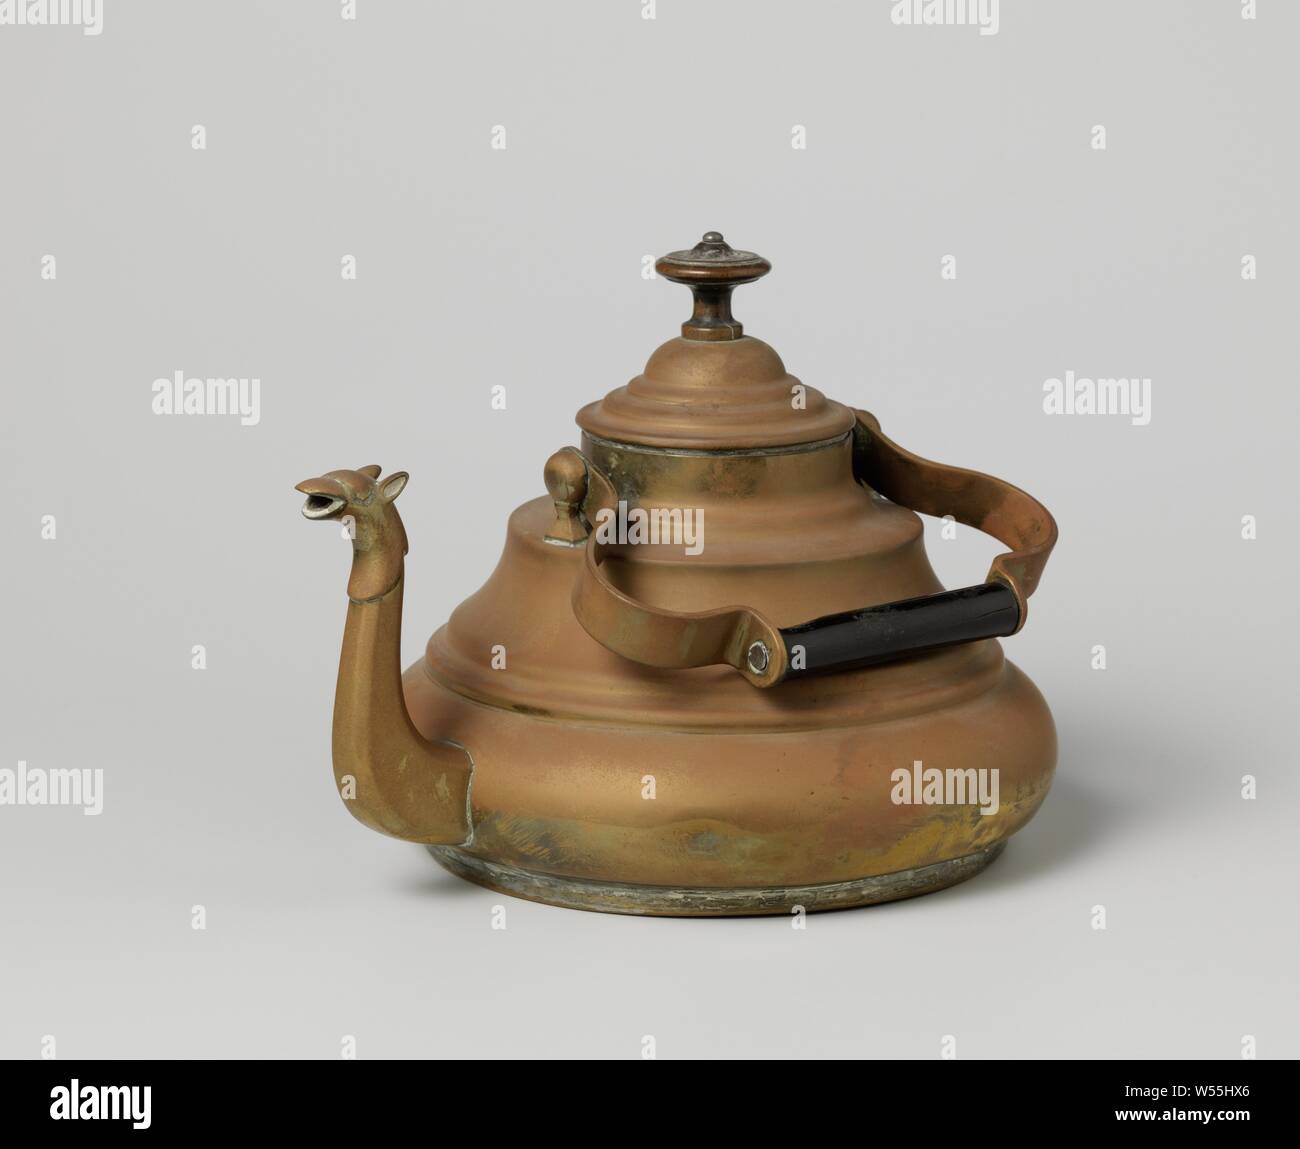 Antique Chinese Brass Metal Tea Kettle Teapot Long Spout Detailed Handle  Heavy